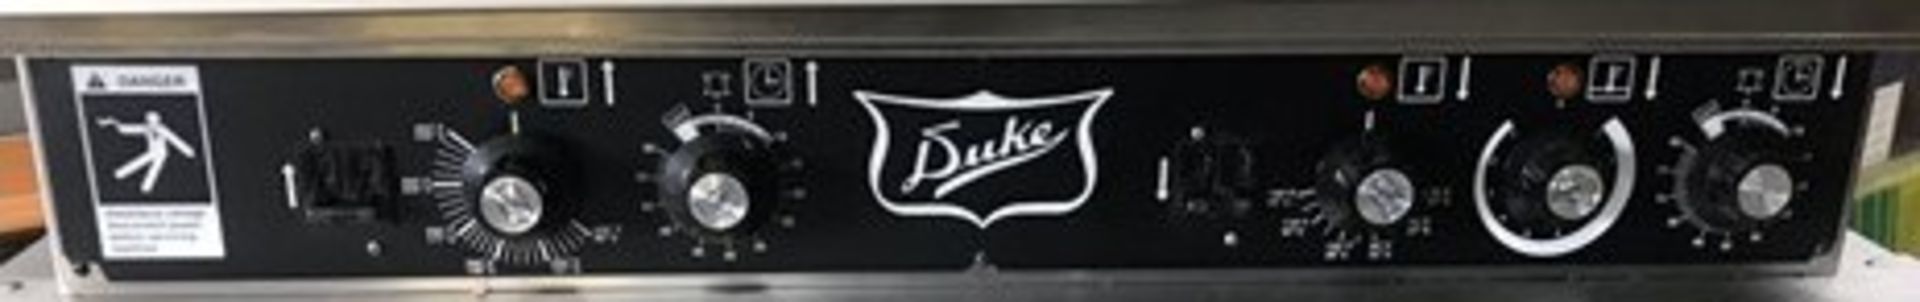 Duke AHPO-618 Bread Proofer & Oven - Image 5 of 9